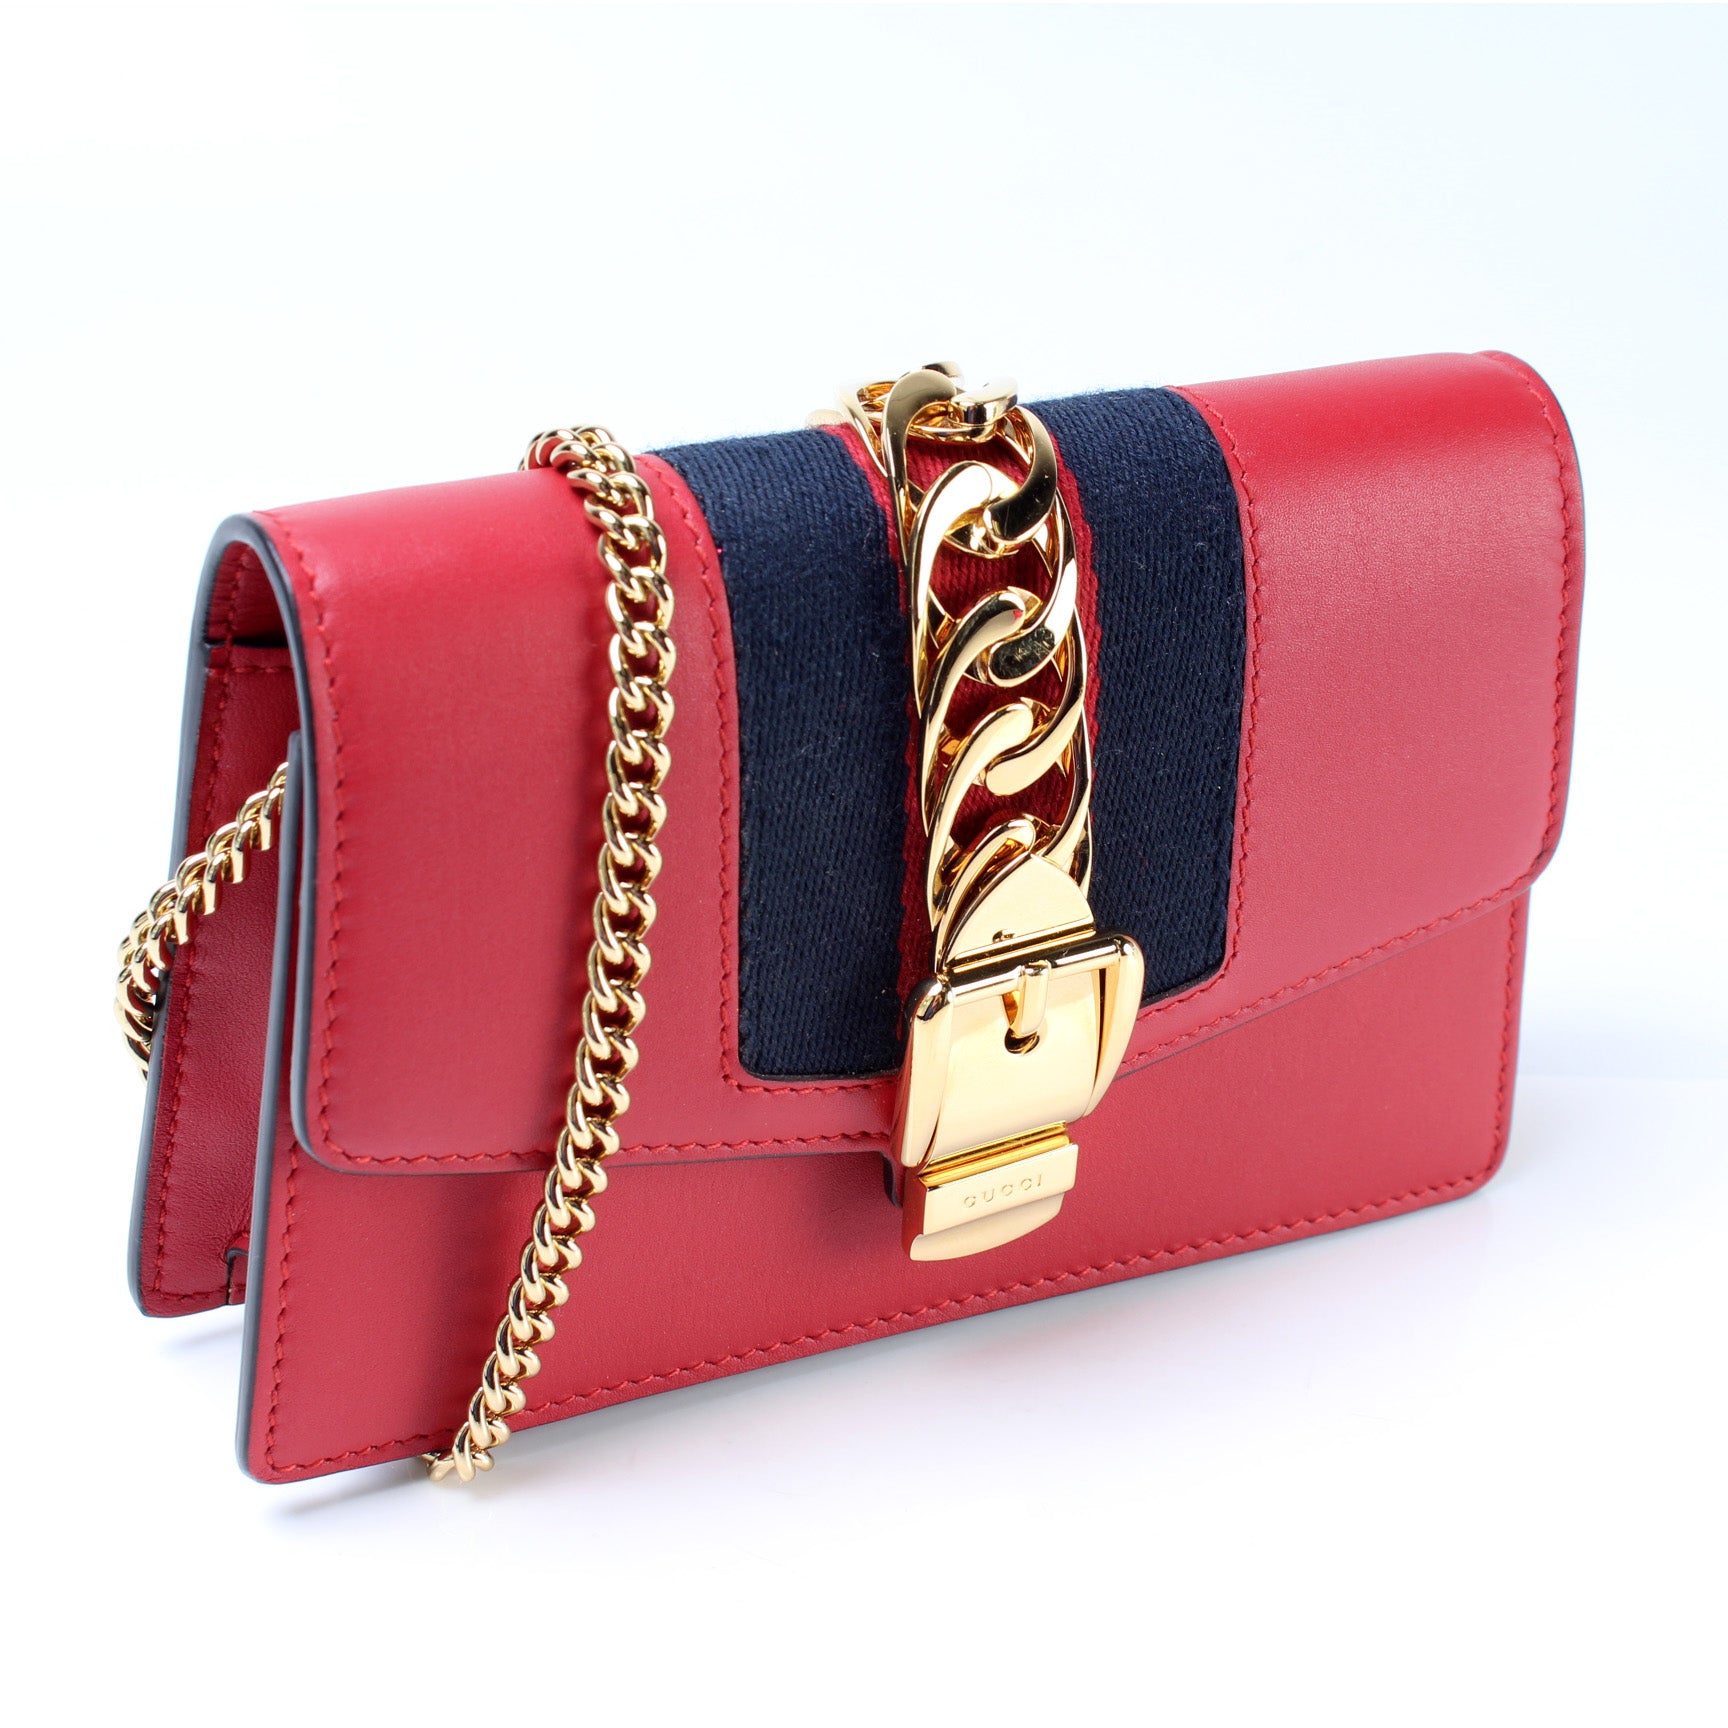 Gucci Sylvie Super Mini Leather Crossbody Bag